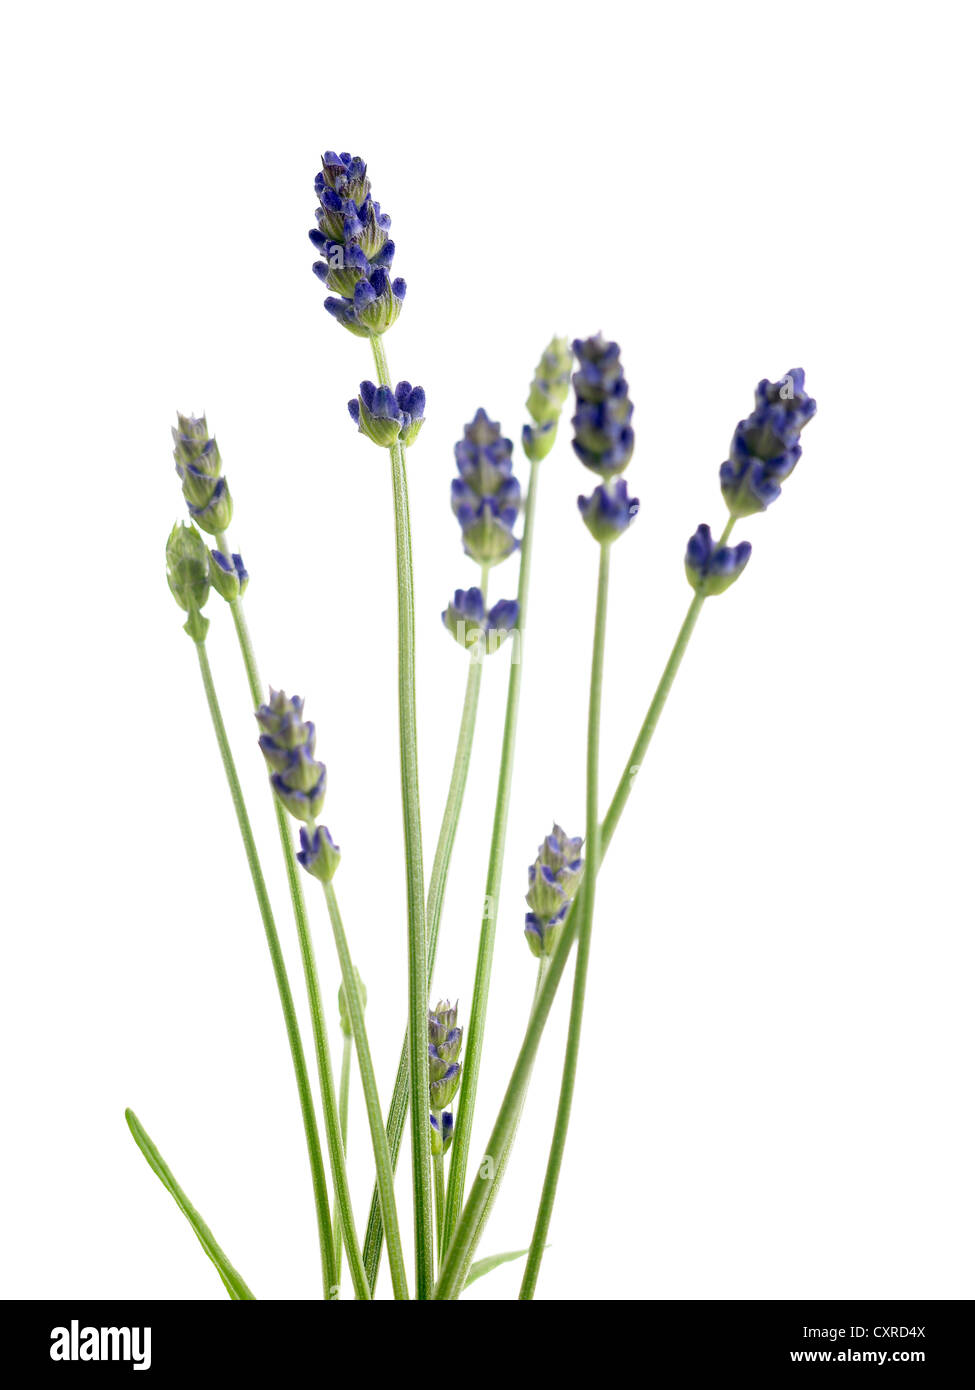 Lavandula angustifolia ‘Hidcote’ common name Lavender Stock Photo